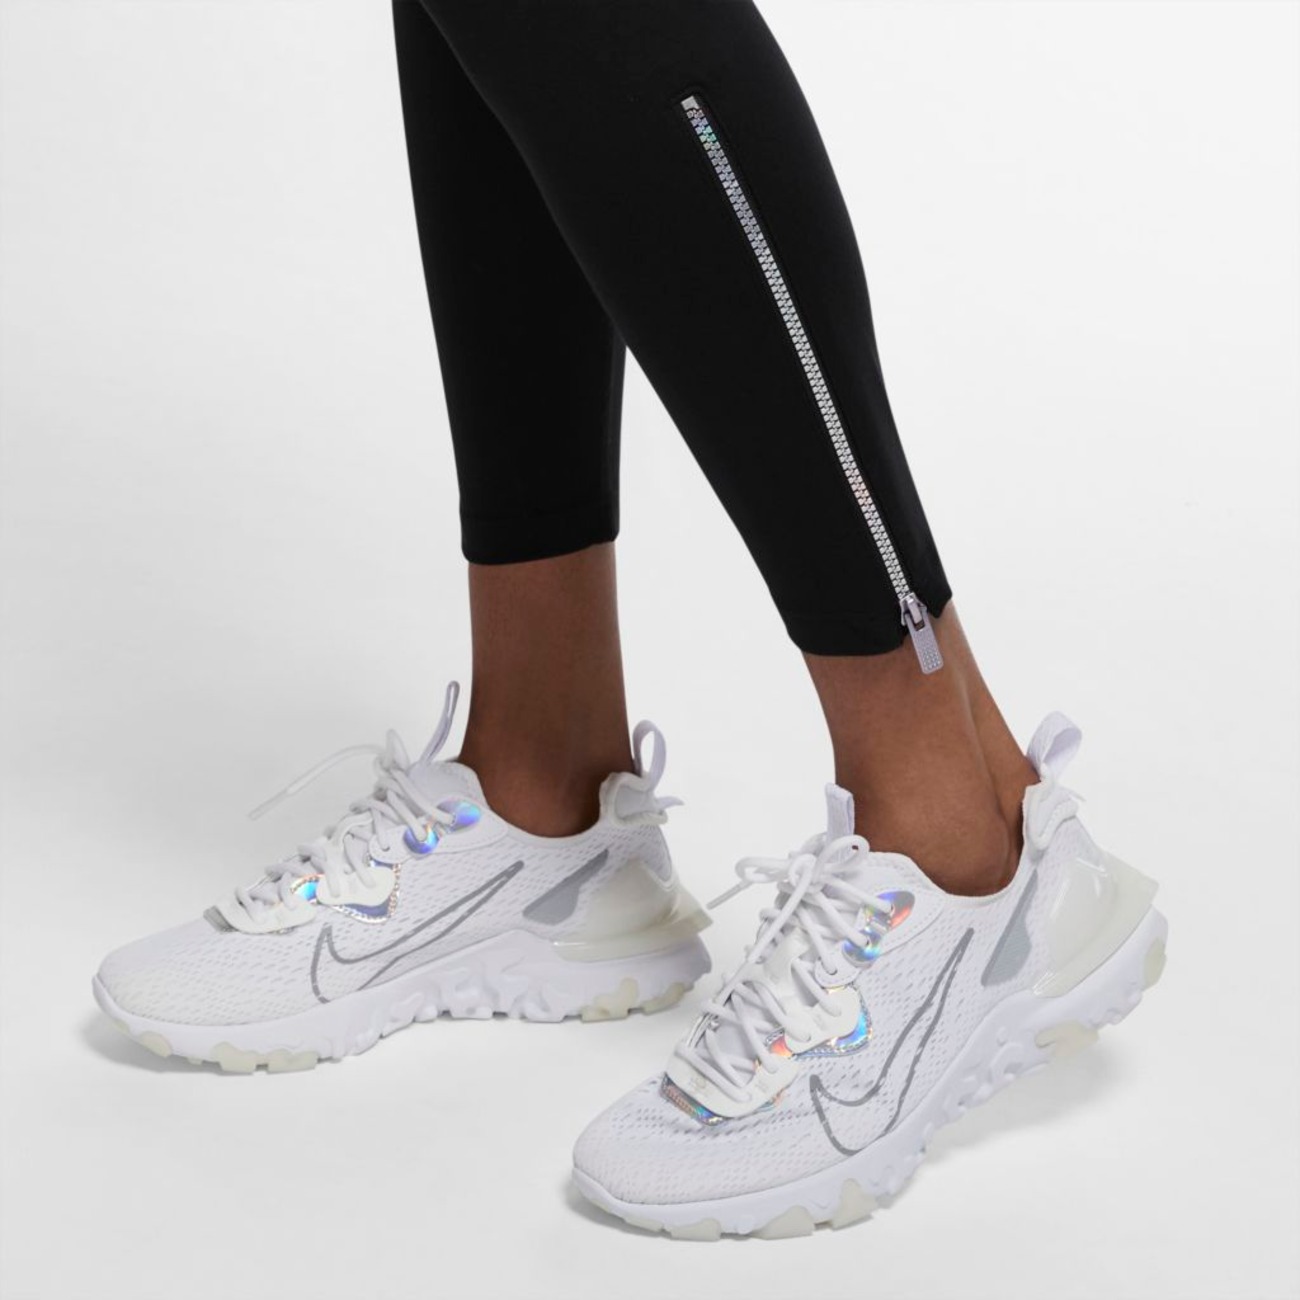 Legging Nike Sportswear Feminina - Foto 3